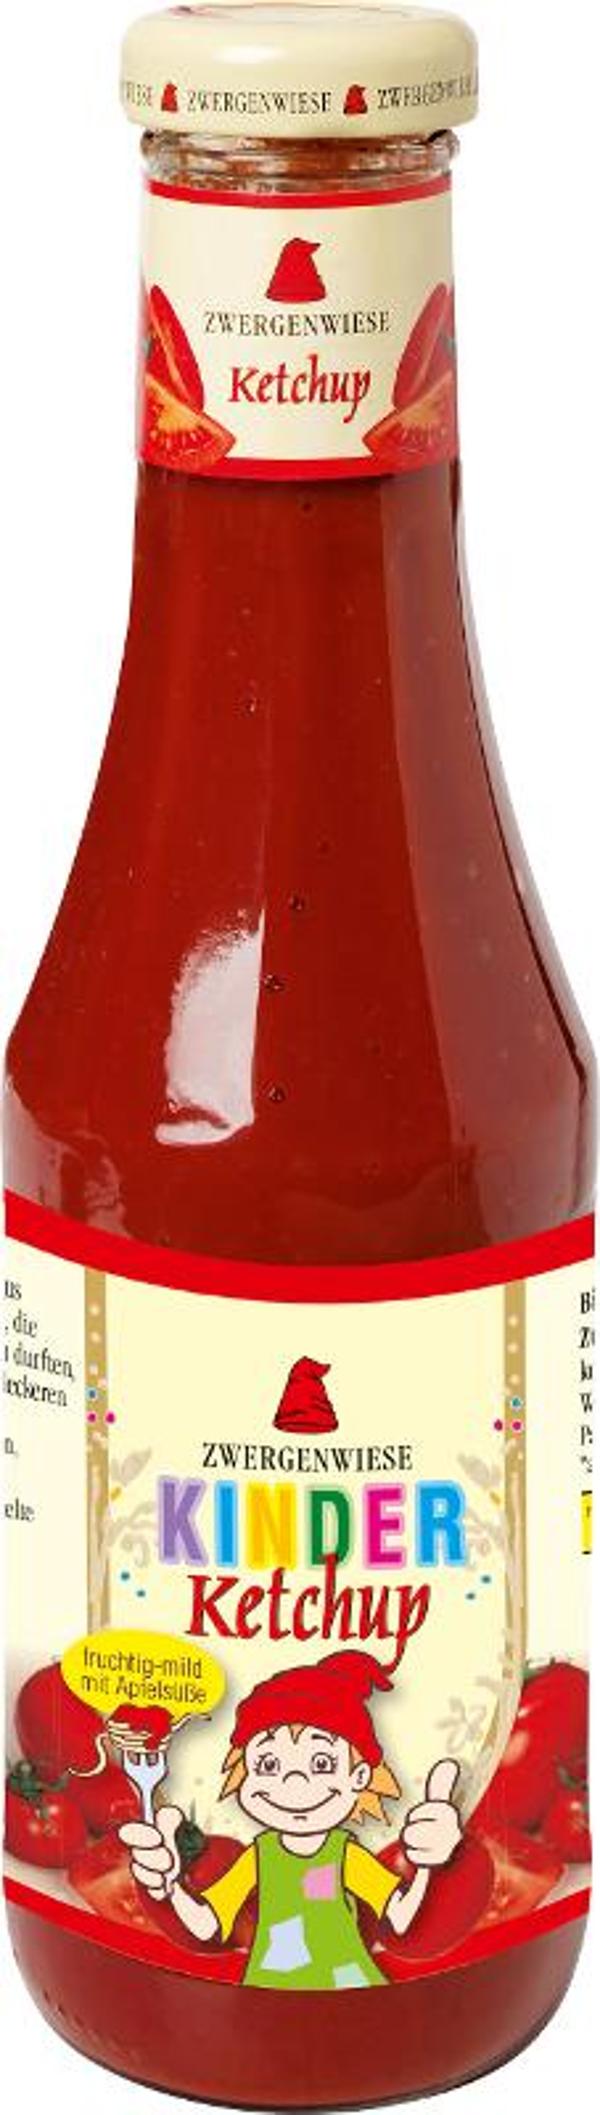 Produktfoto zu Kinder-Ketchup mit Apfelsüße 500g